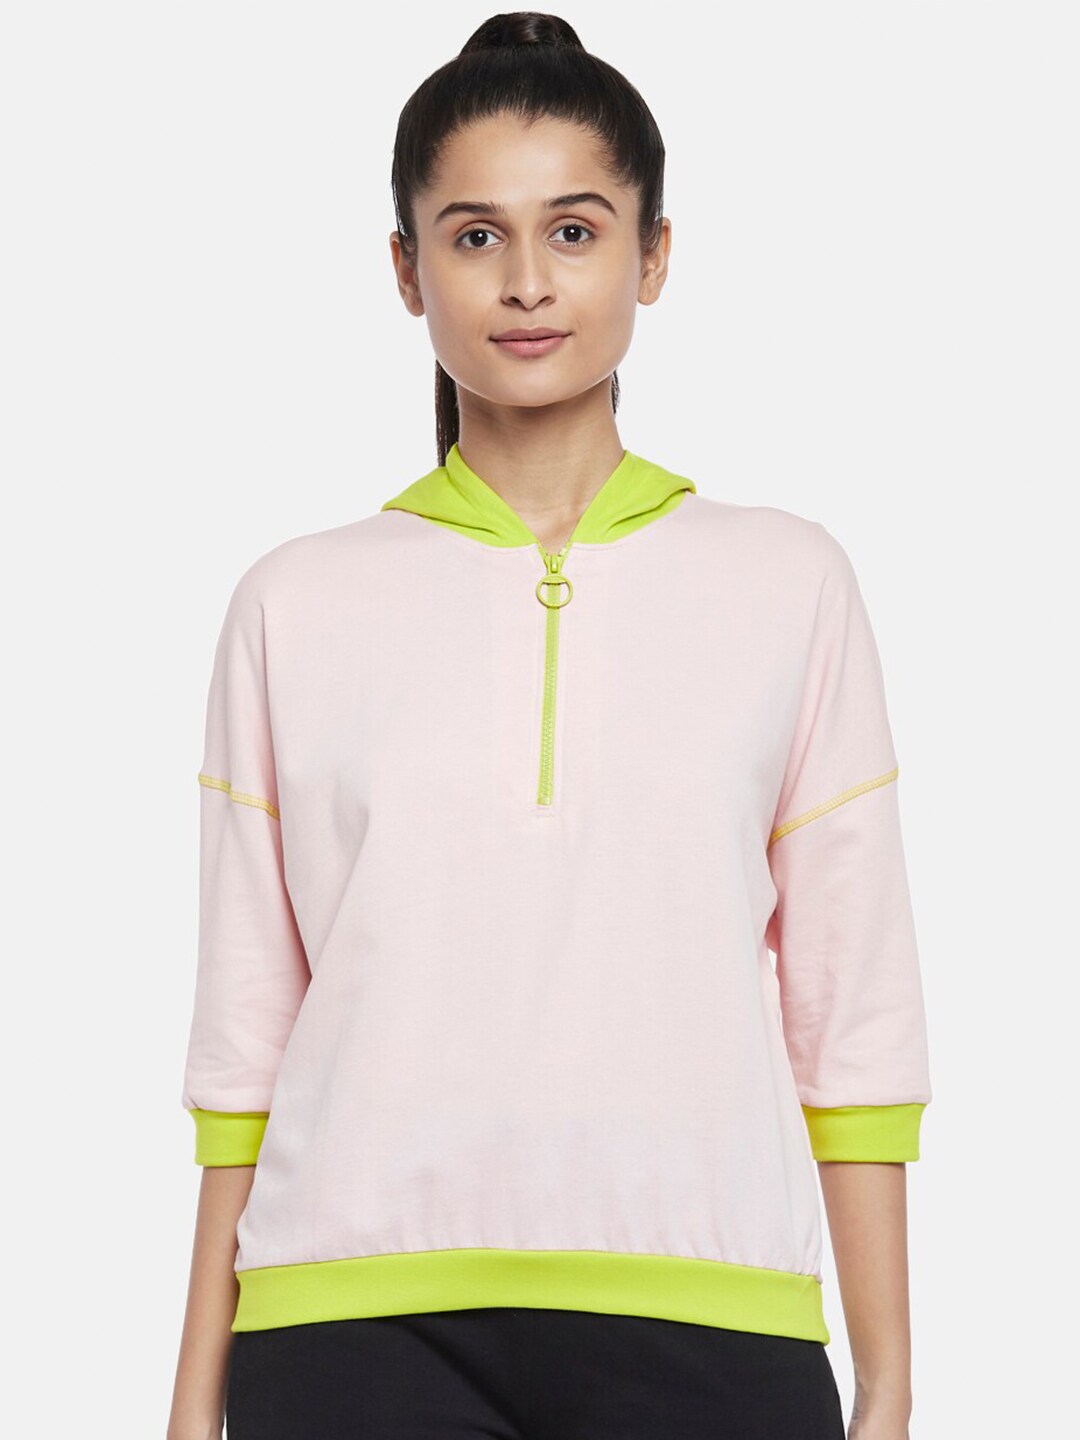 Ajile by Pantaloons Women Pink & Green Solid Sweatshirt Price in India